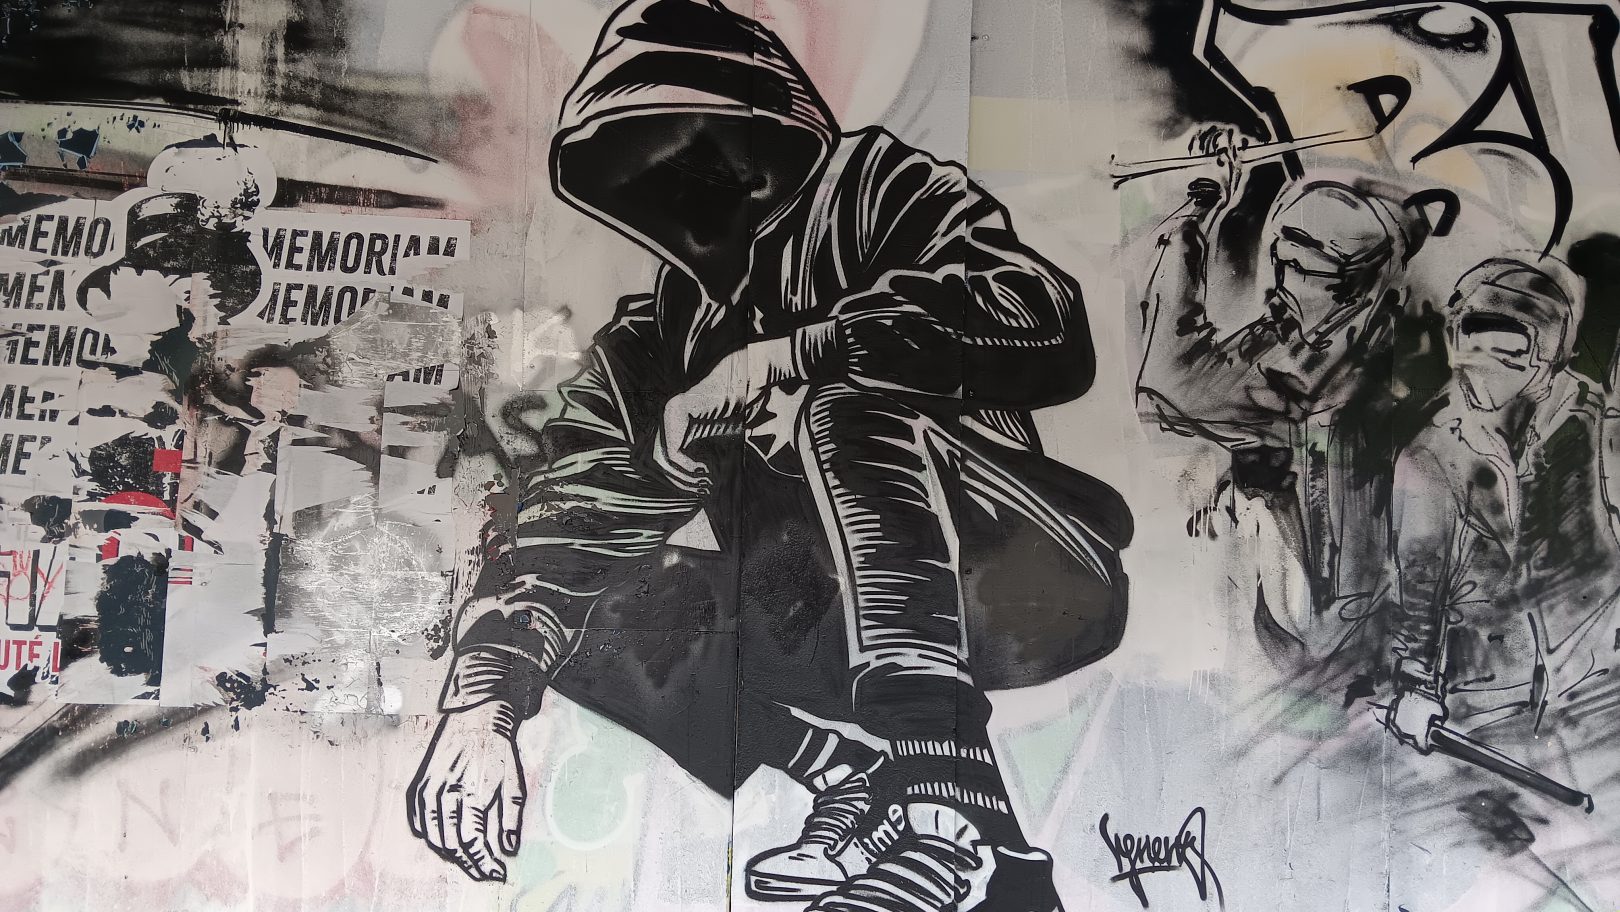 Protest-inspired wall art, 3 Rue Marcel Sembat, Nantes